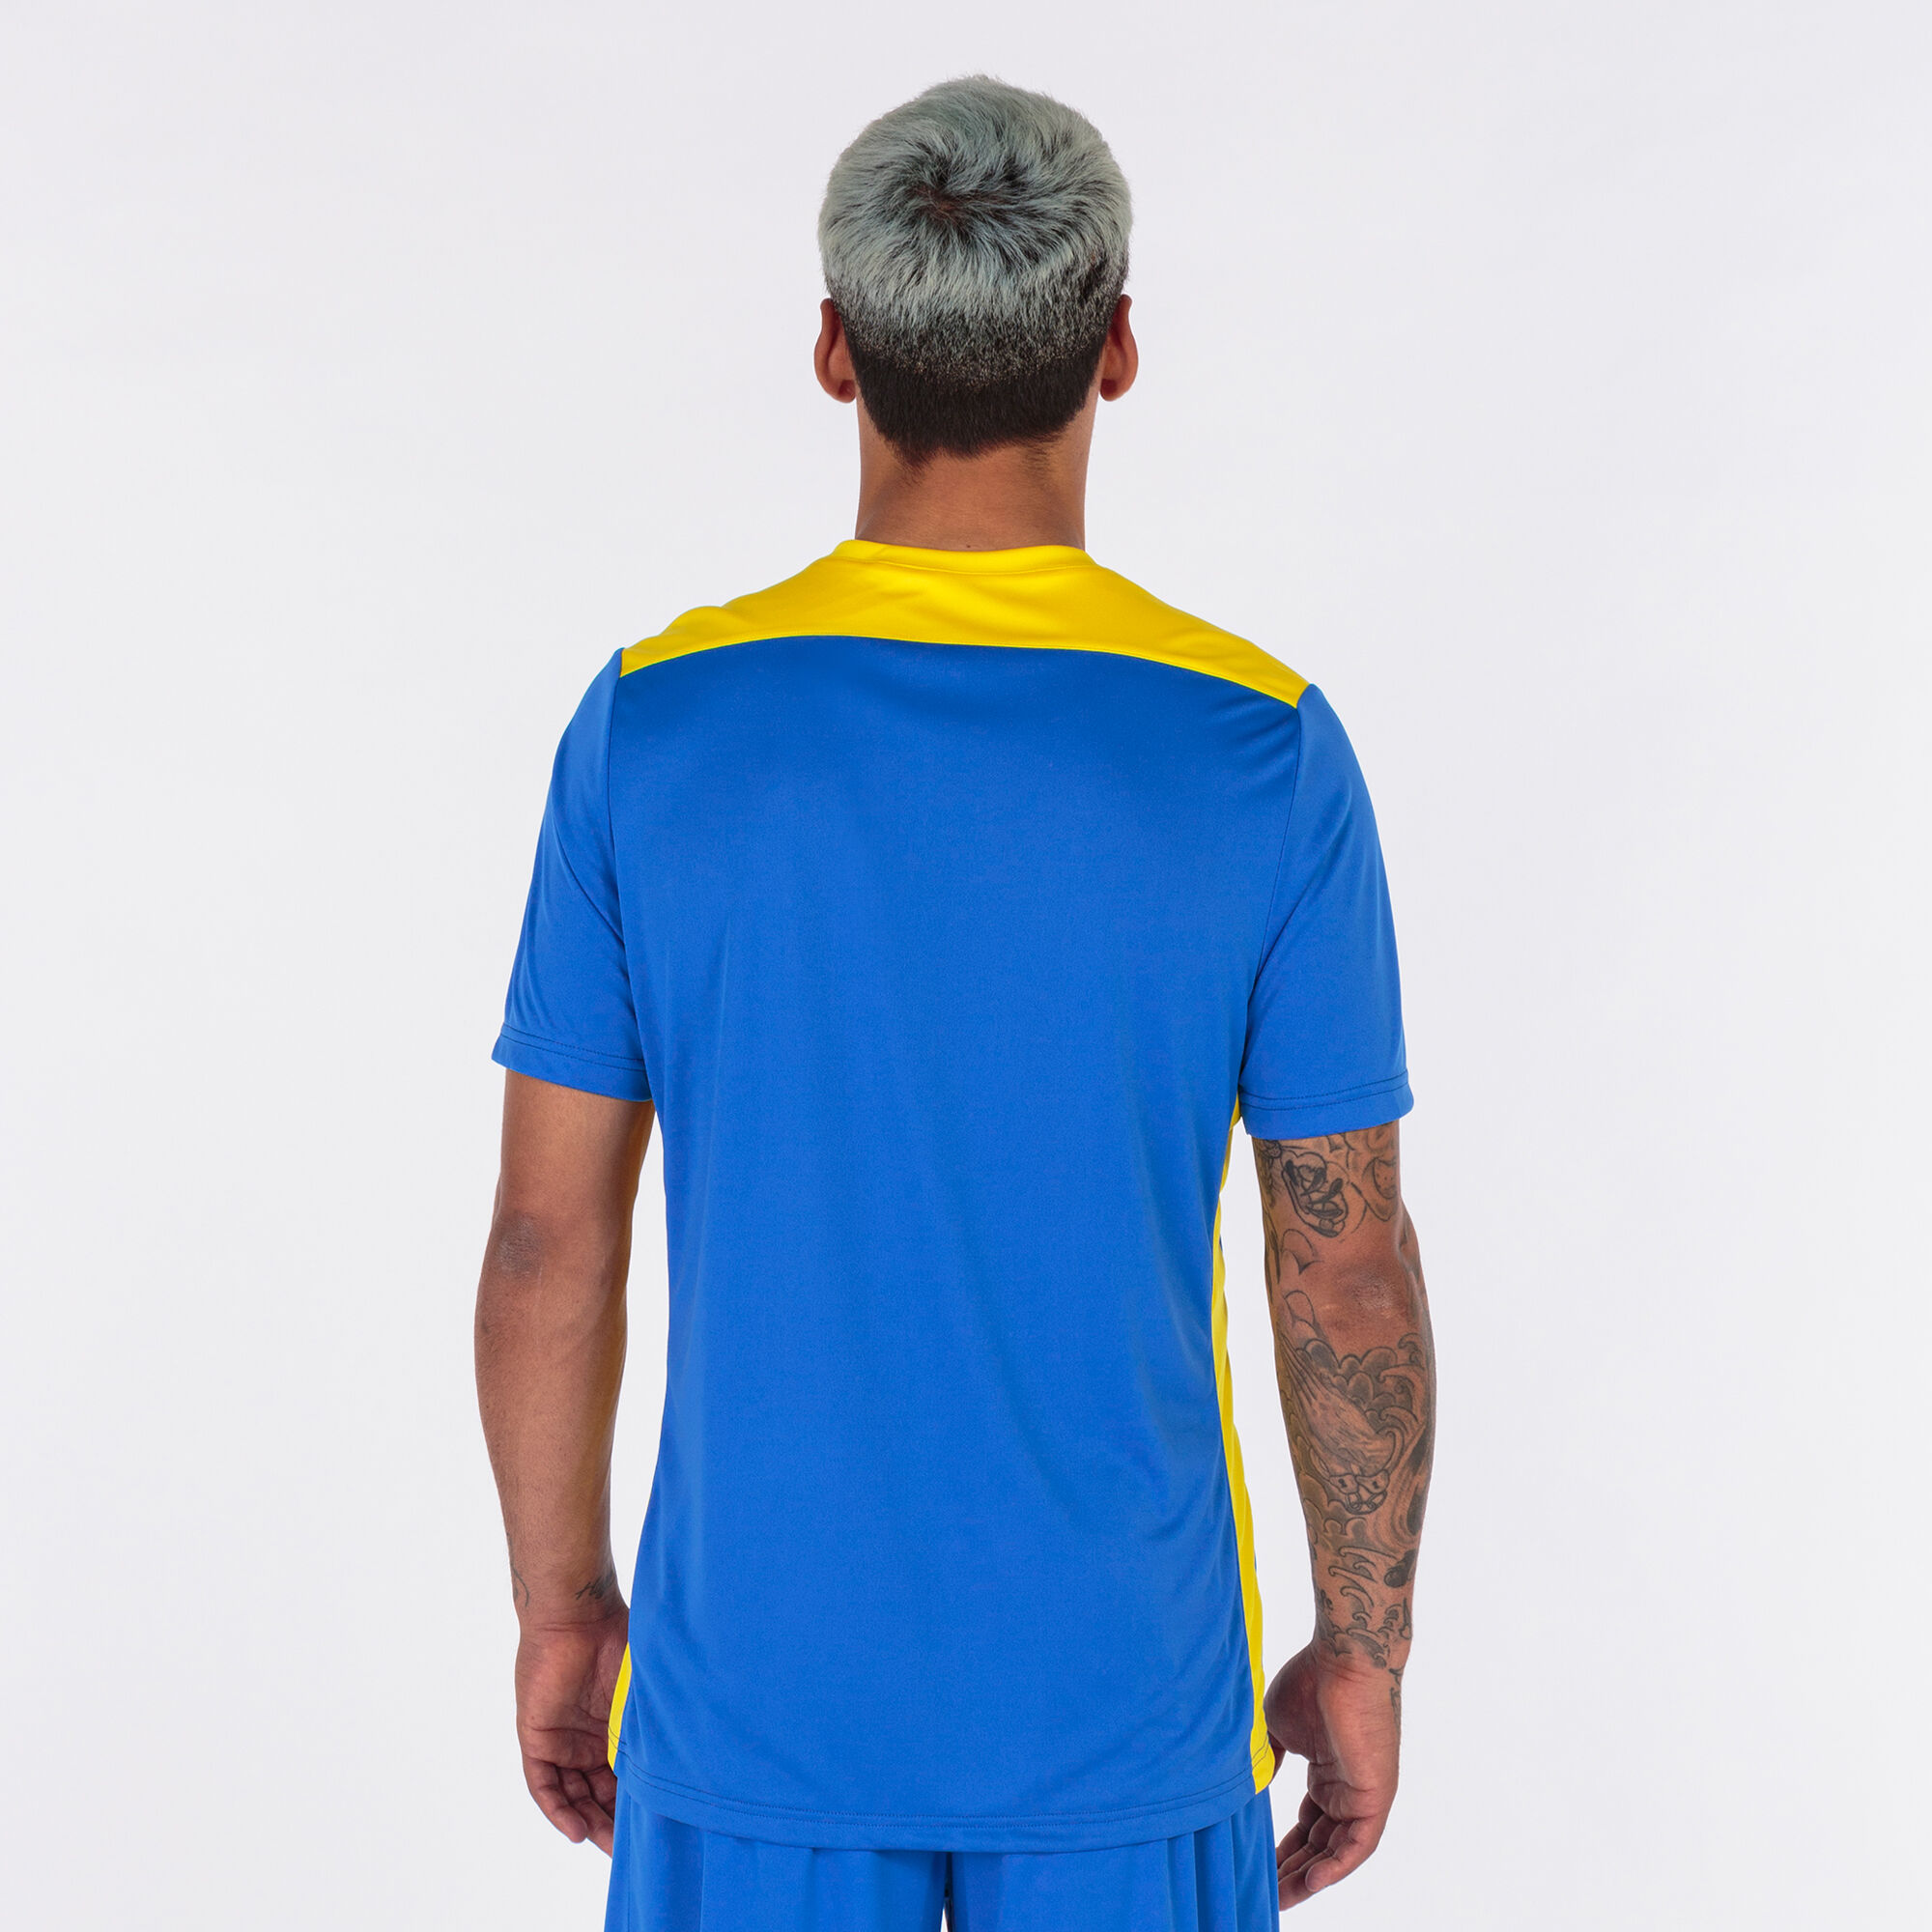 Shirt short sleeve man Championship VI royal blue yellow